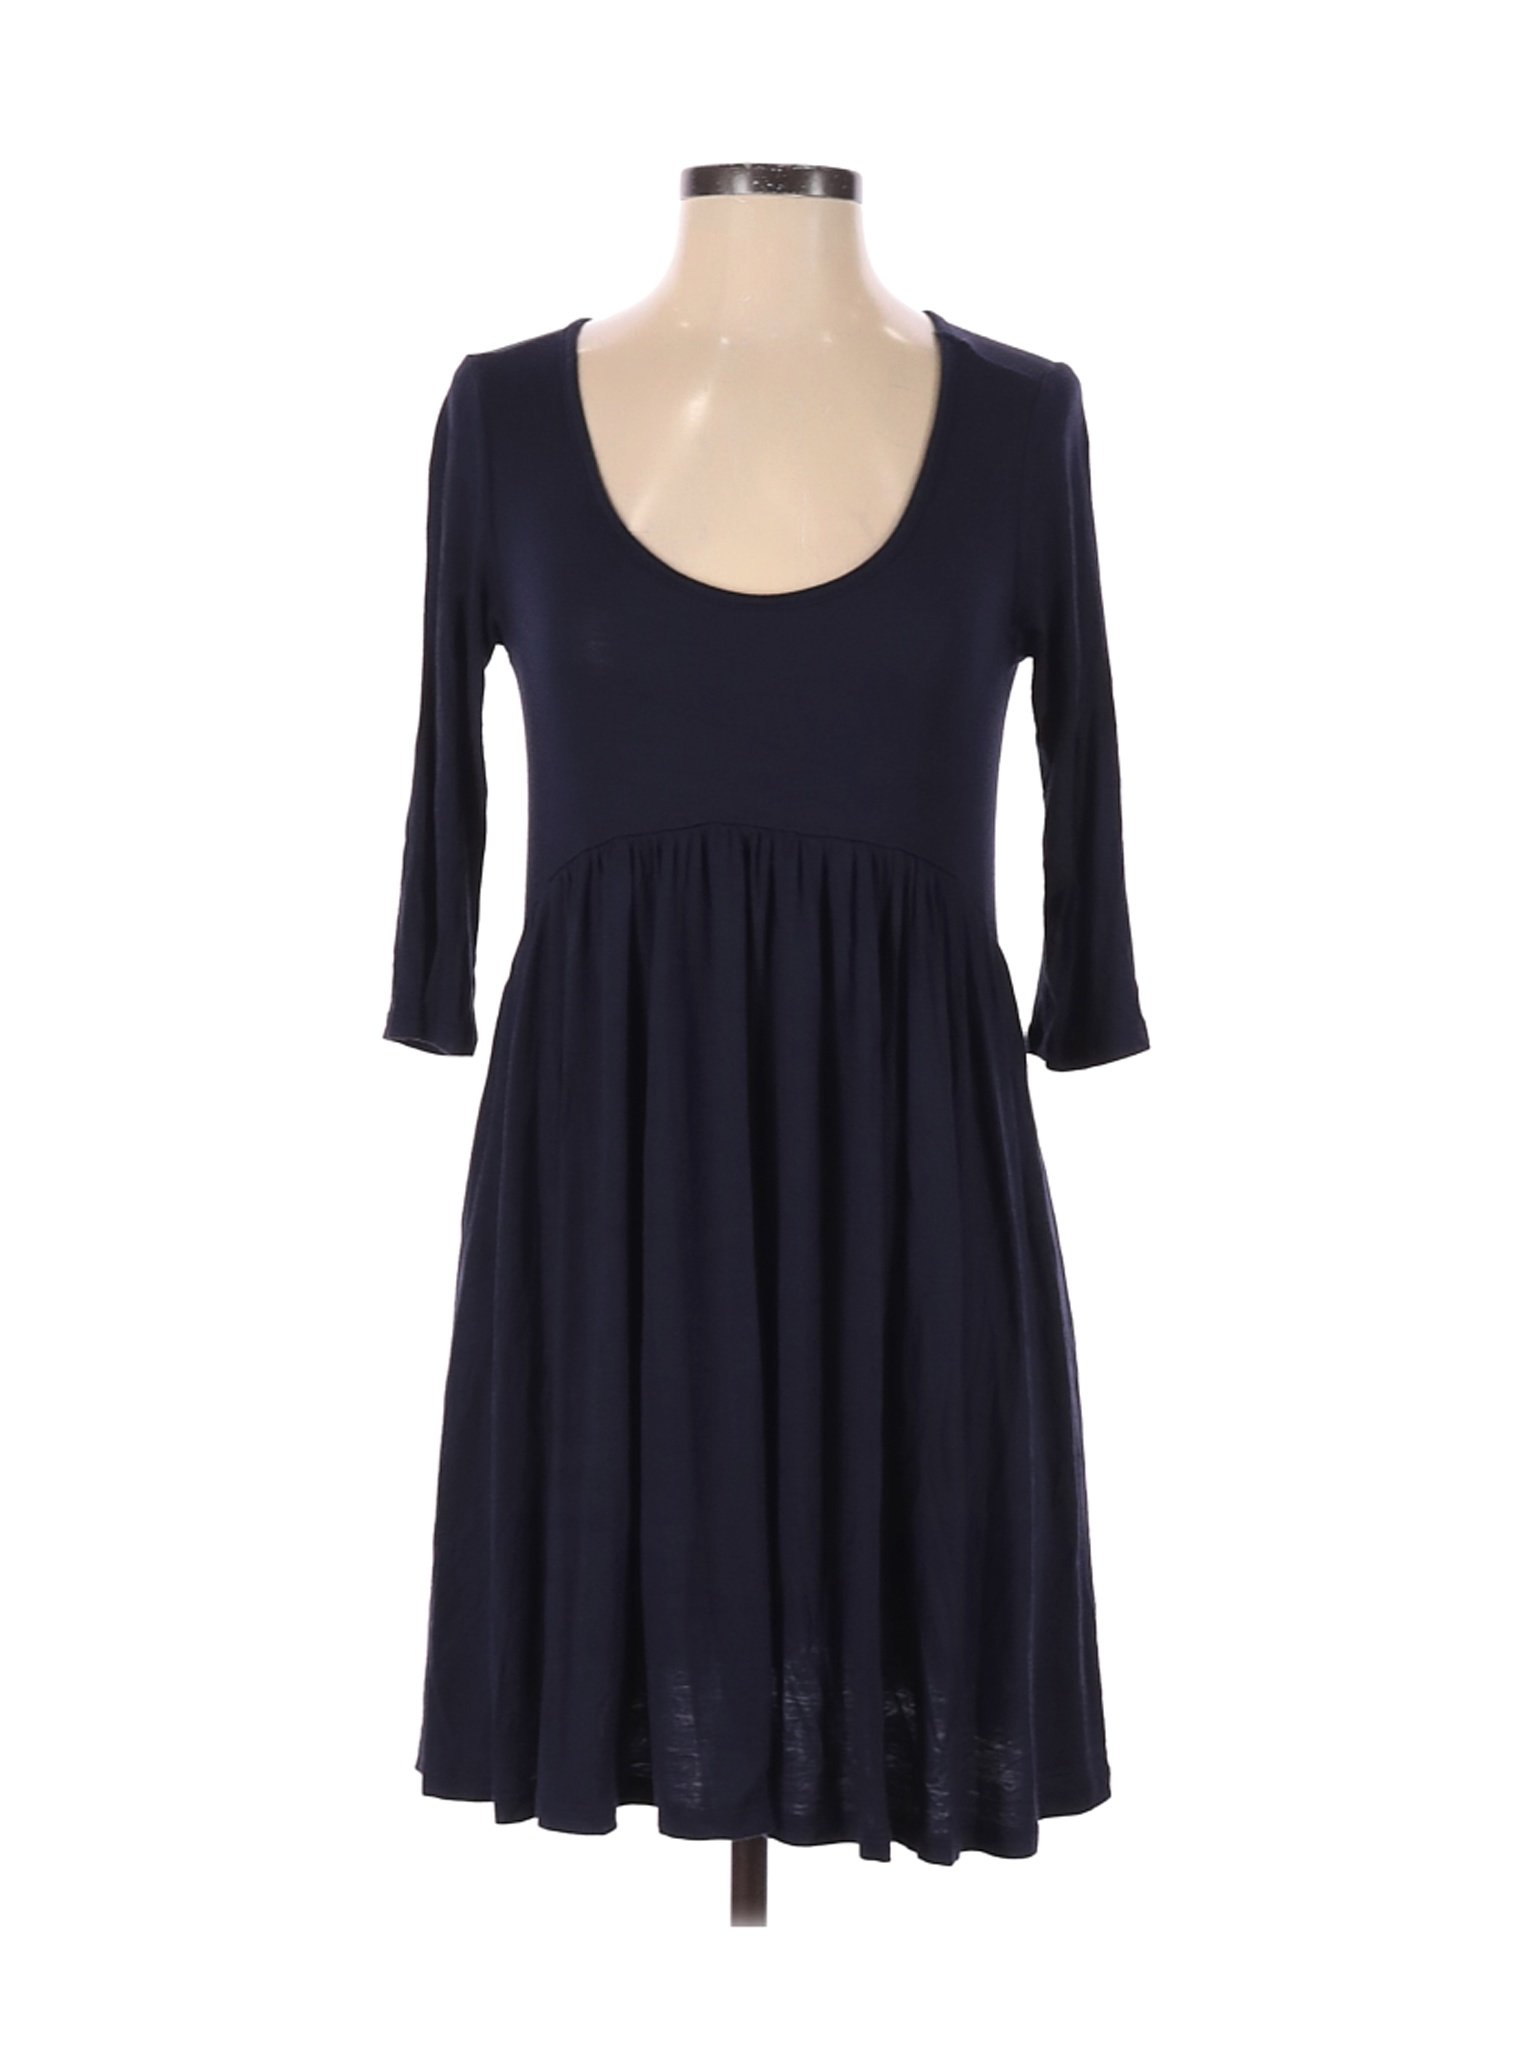 Annabelle Women Black Casual Dress S | eBay